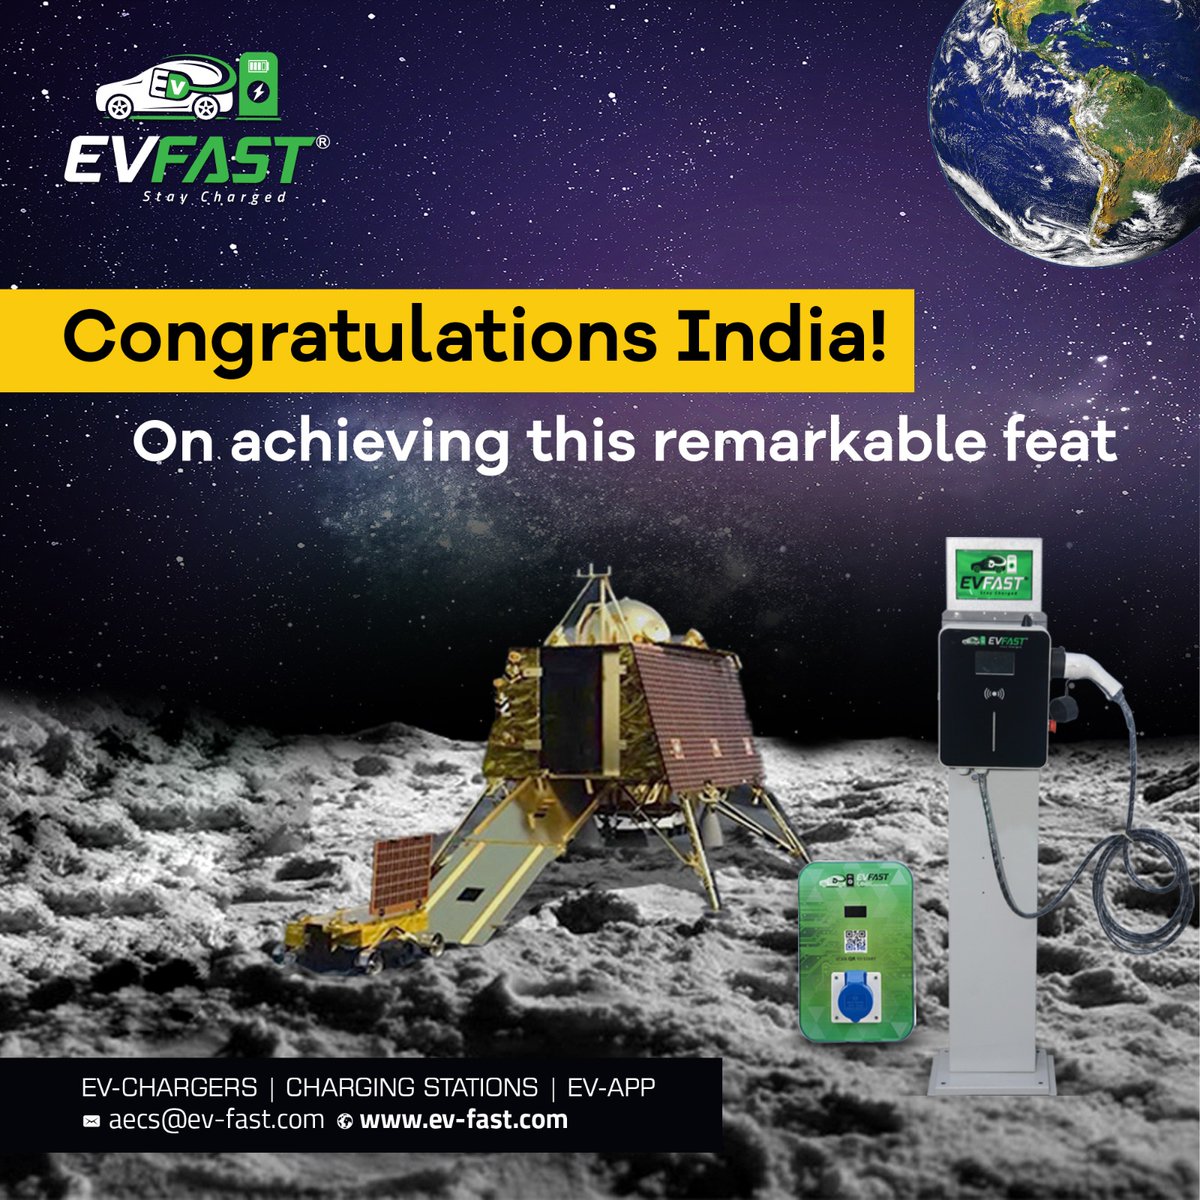 𝐂𝐡𝐚𝐧𝐝𝐫𝐚𝐲𝐚𝐚𝐧 3 𝐋𝐚𝐧𝐝𝐬 𝐨𝐧 𝐭𝐡𝐞 𝐌𝐨𝐨𝐧. 𝐂𝐞𝐥𝐞𝐛𝐫𝐚𝐭𝐢𝐧𝐠 𝐈𝐧𝐧𝐨𝐯𝐚𝐭𝐢𝐨𝐧 𝐭𝐡𝐚𝐭'𝐬 𝐎𝐮𝐭 𝐨𝐟 𝐭𝐡𝐢𝐬 𝐖𝐨𝐫𝐥𝐝.

#evfast #evfastcarcharging #chanderyaan3 #moon #mission #india #moonlanding #Chandrayaan3Success #ProudIndian #spacepioneers #ISRO